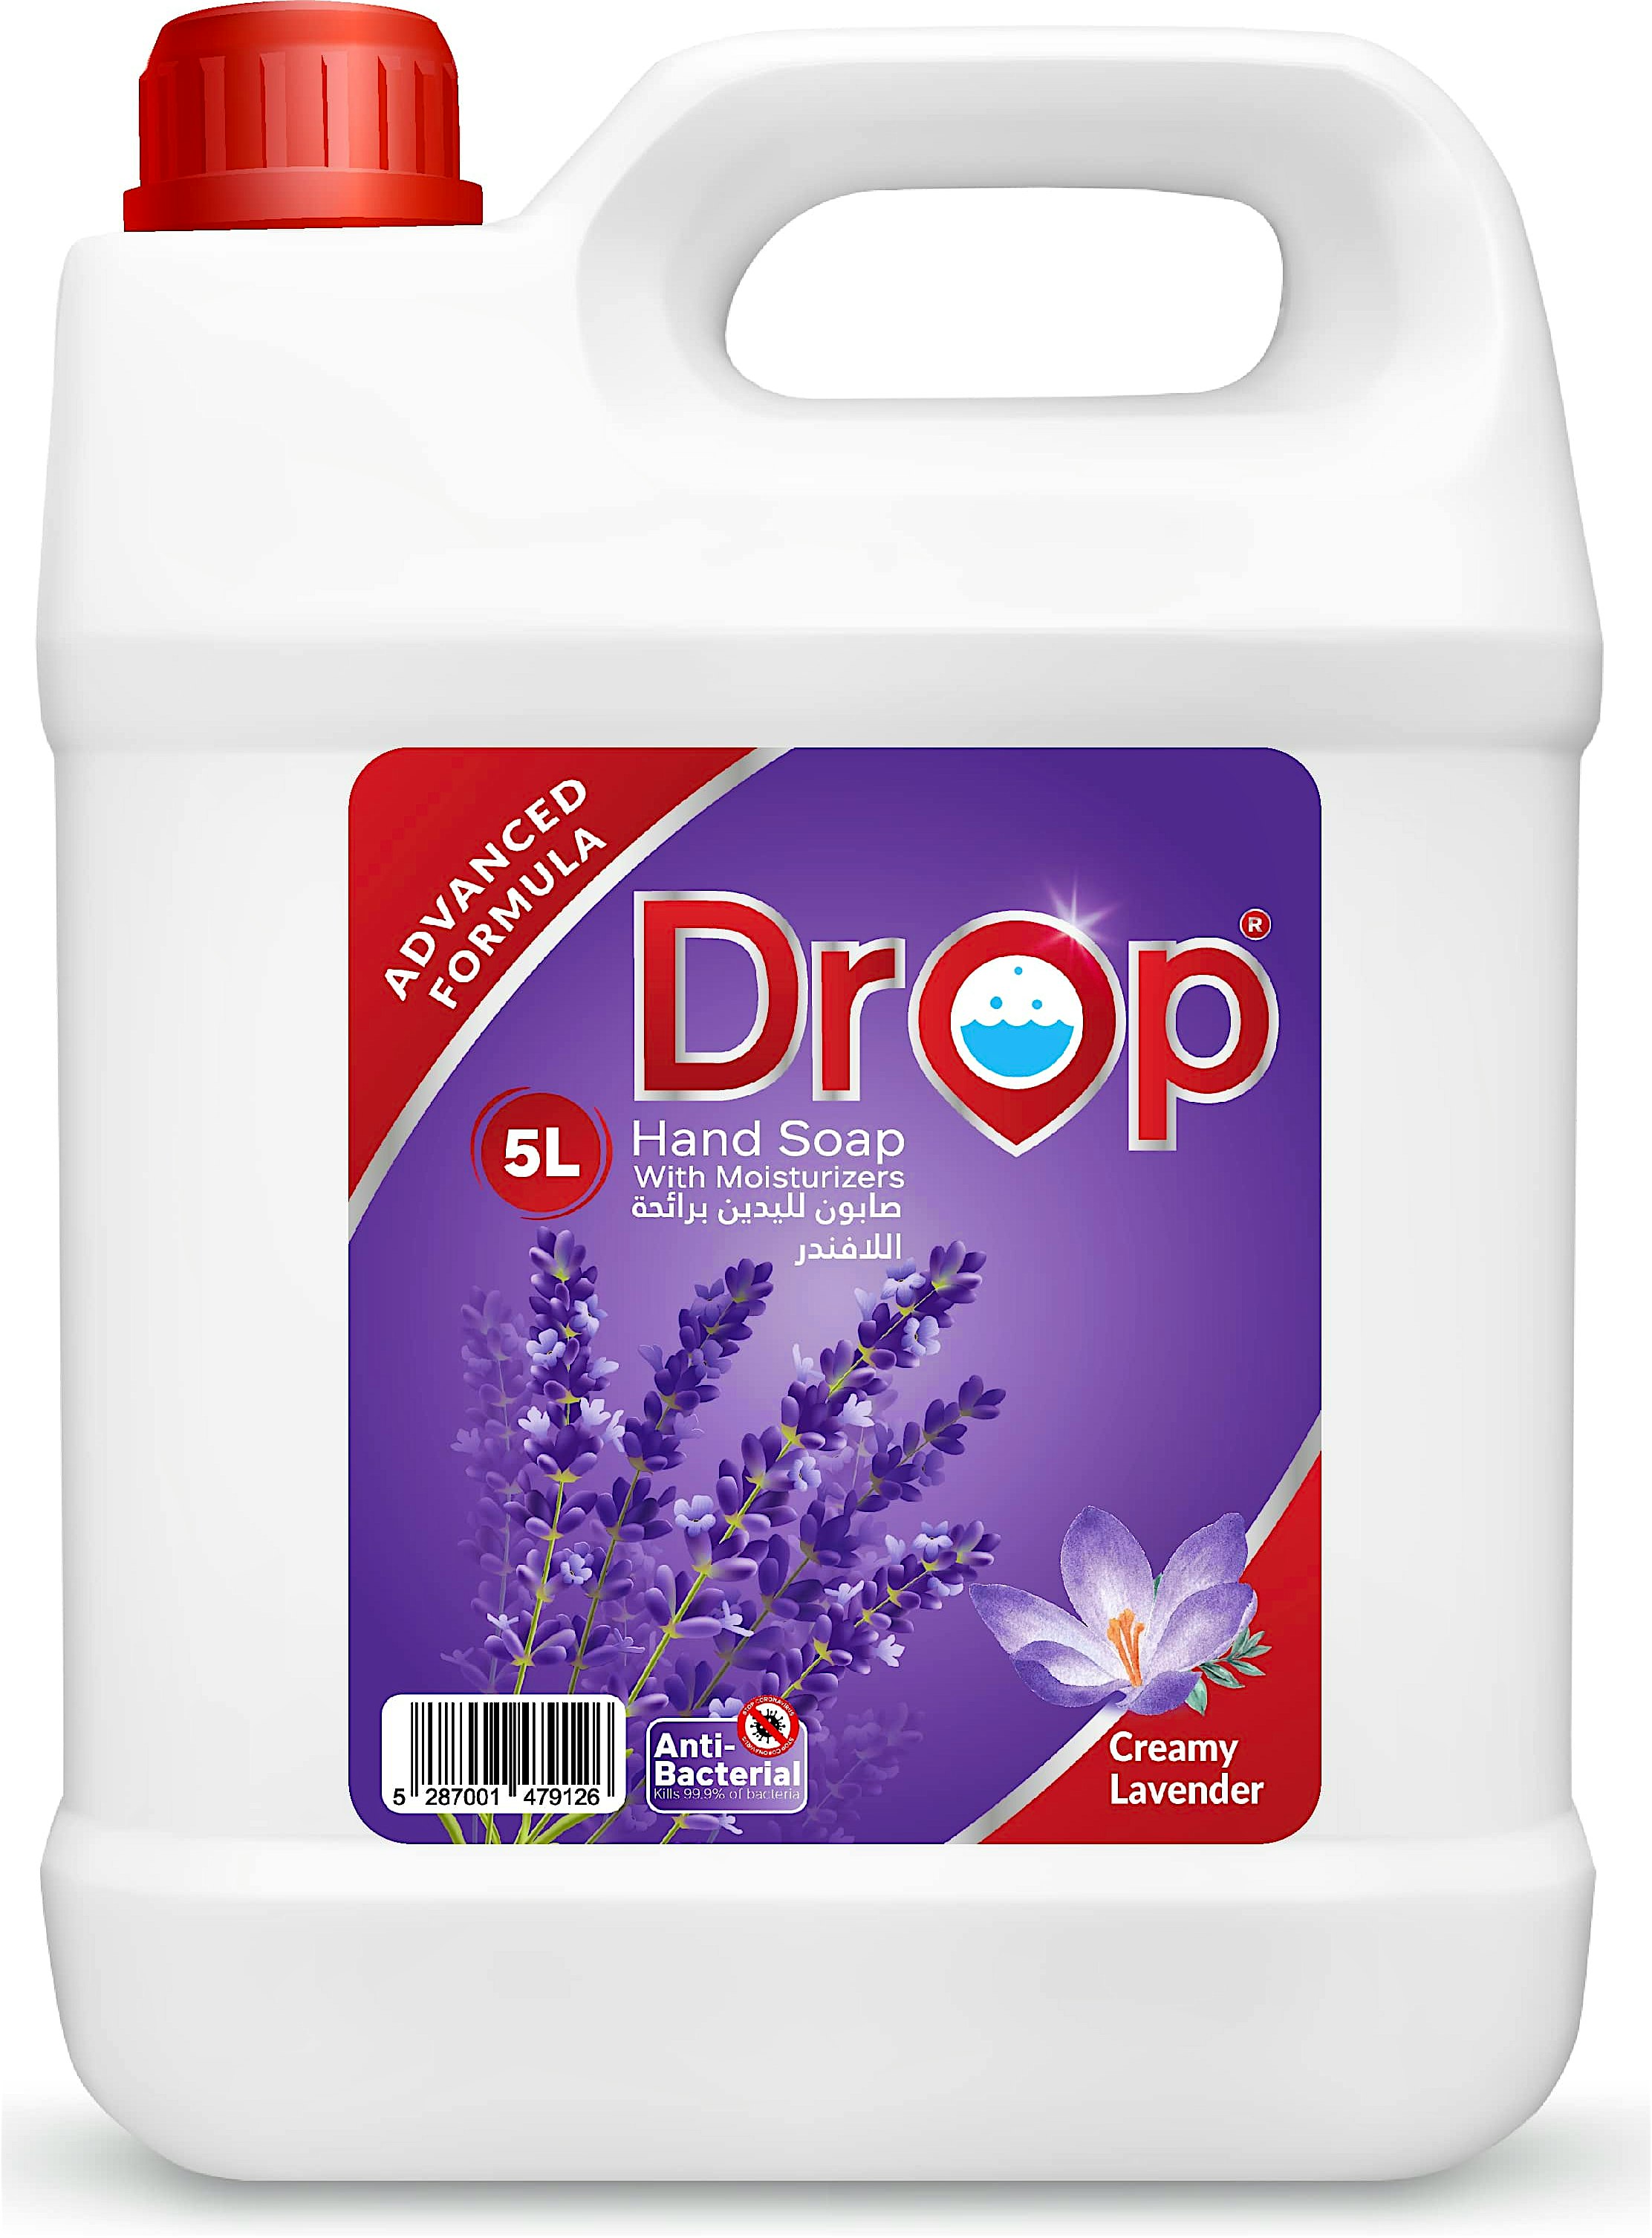 Drop Hand Soap Creamy Lavender 5 L